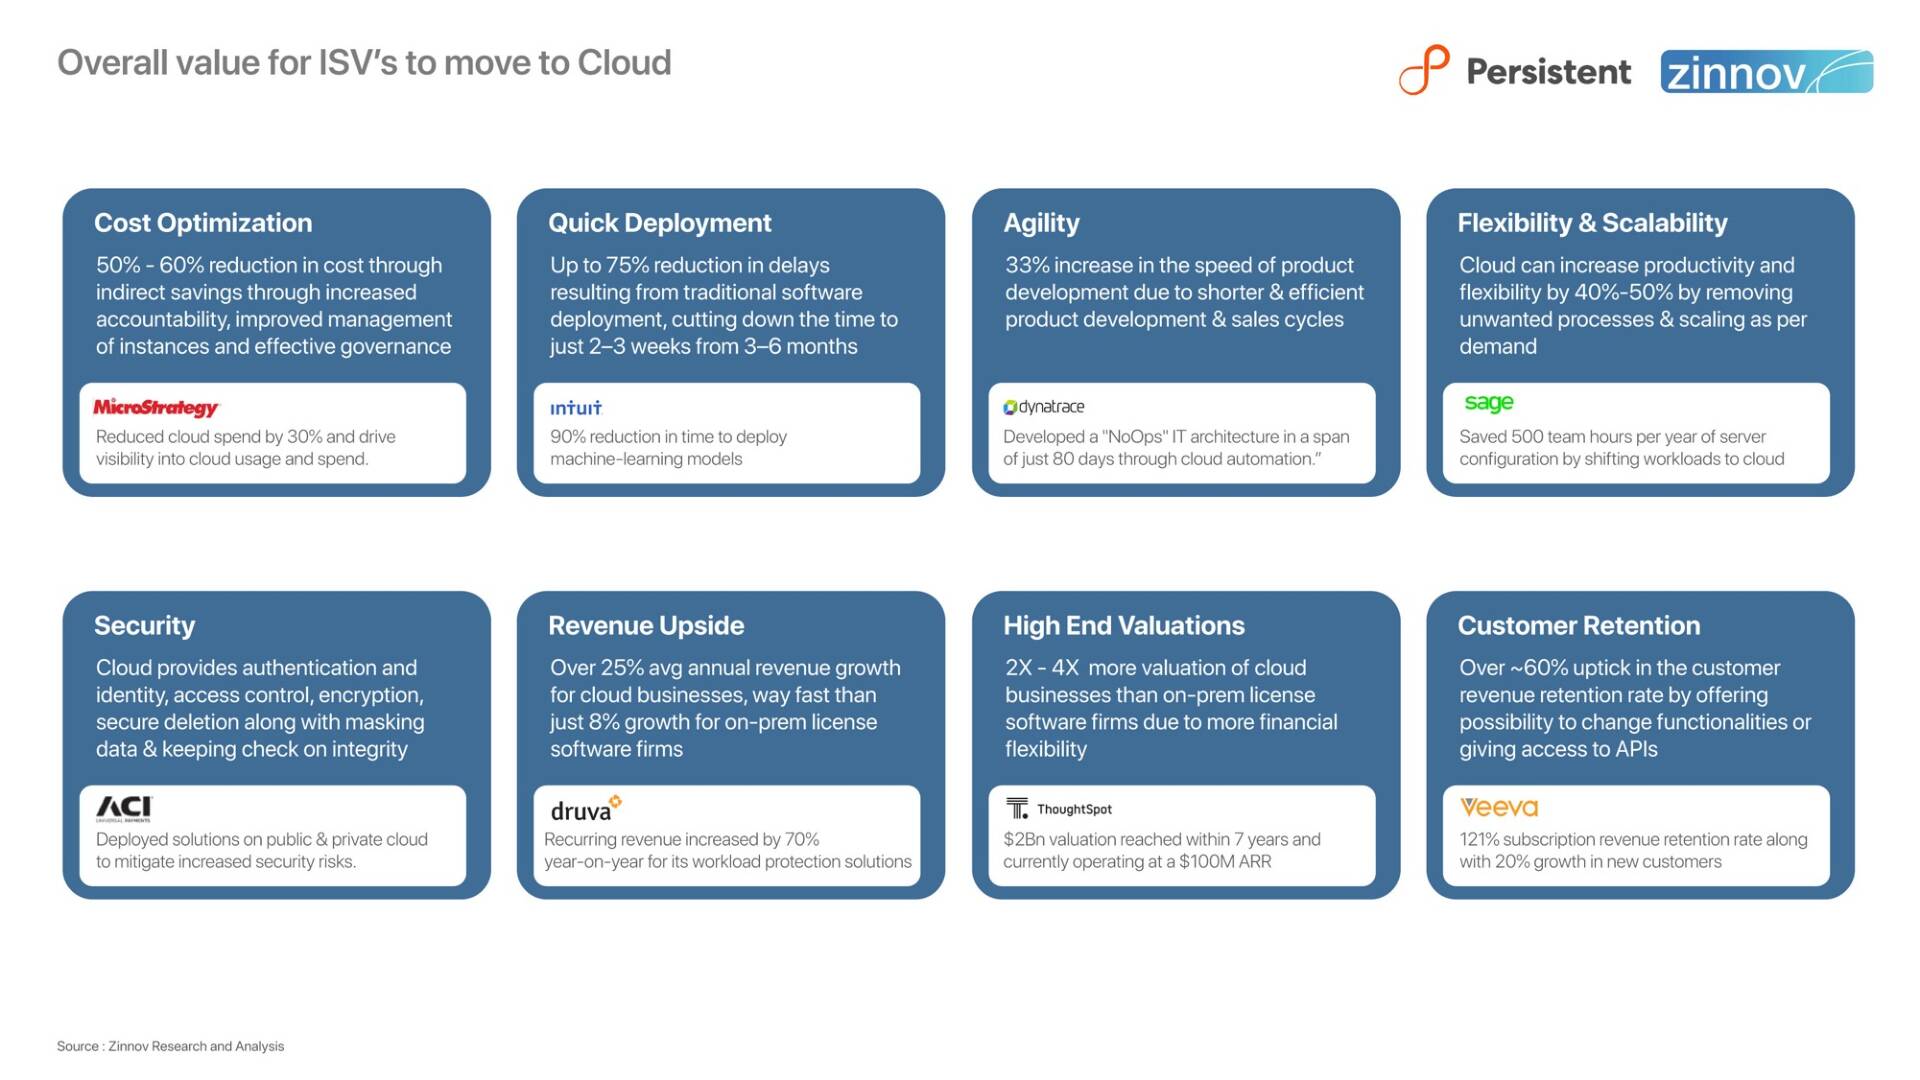 Cloud Migration Report The Cloud Adoption Roadmap For Isvs9